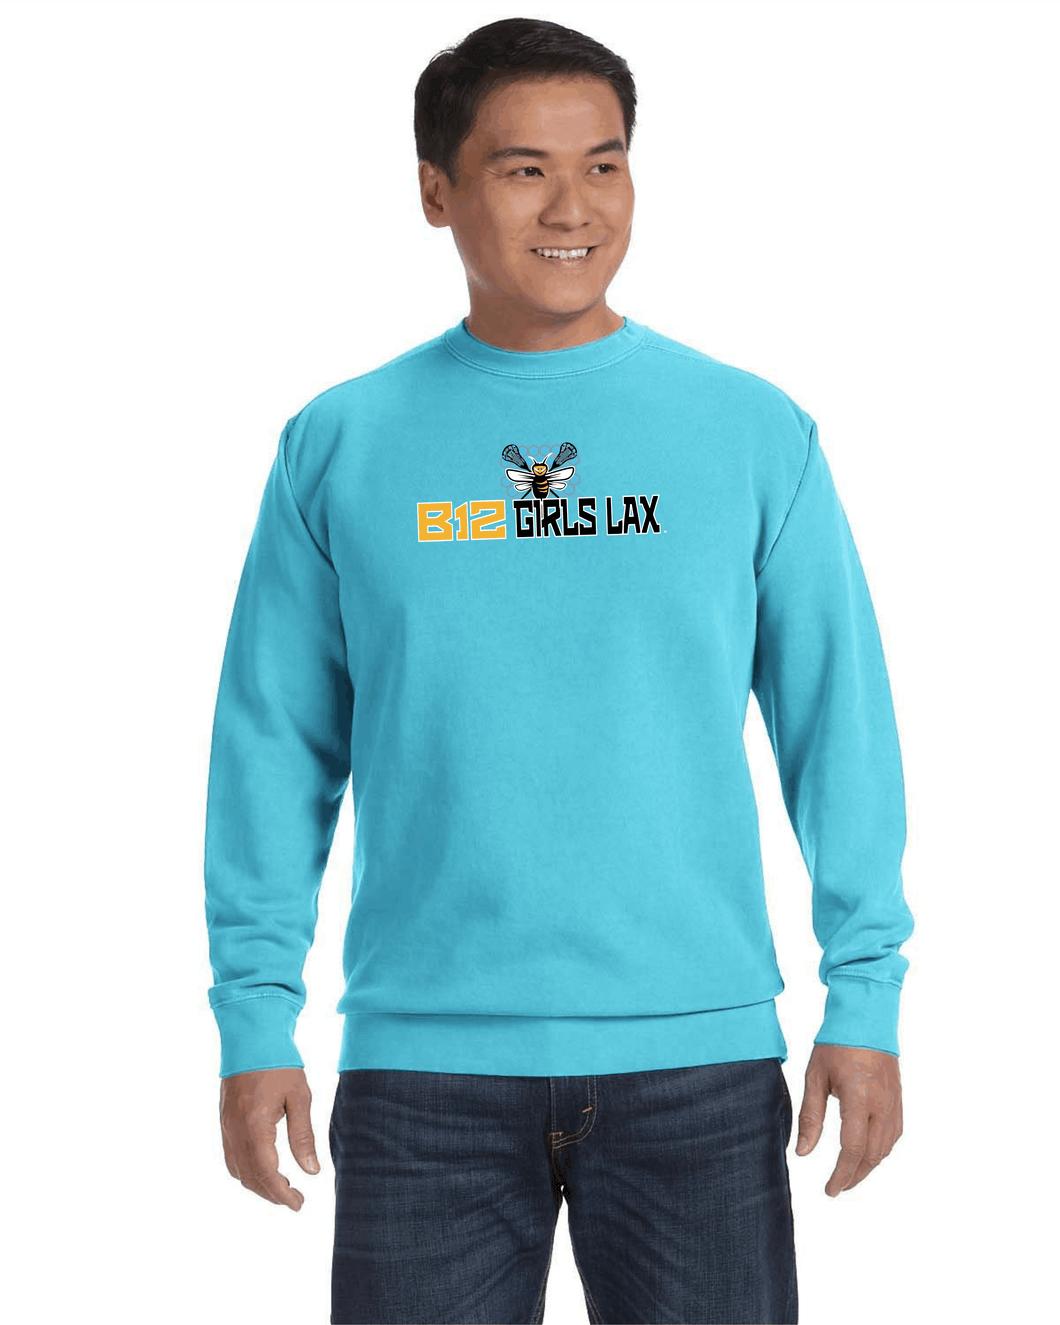 B12-LAX-290-2 - Comfort Colors Adult Crewneck Sweatshirt - B12 Girls LAX Bee Logo